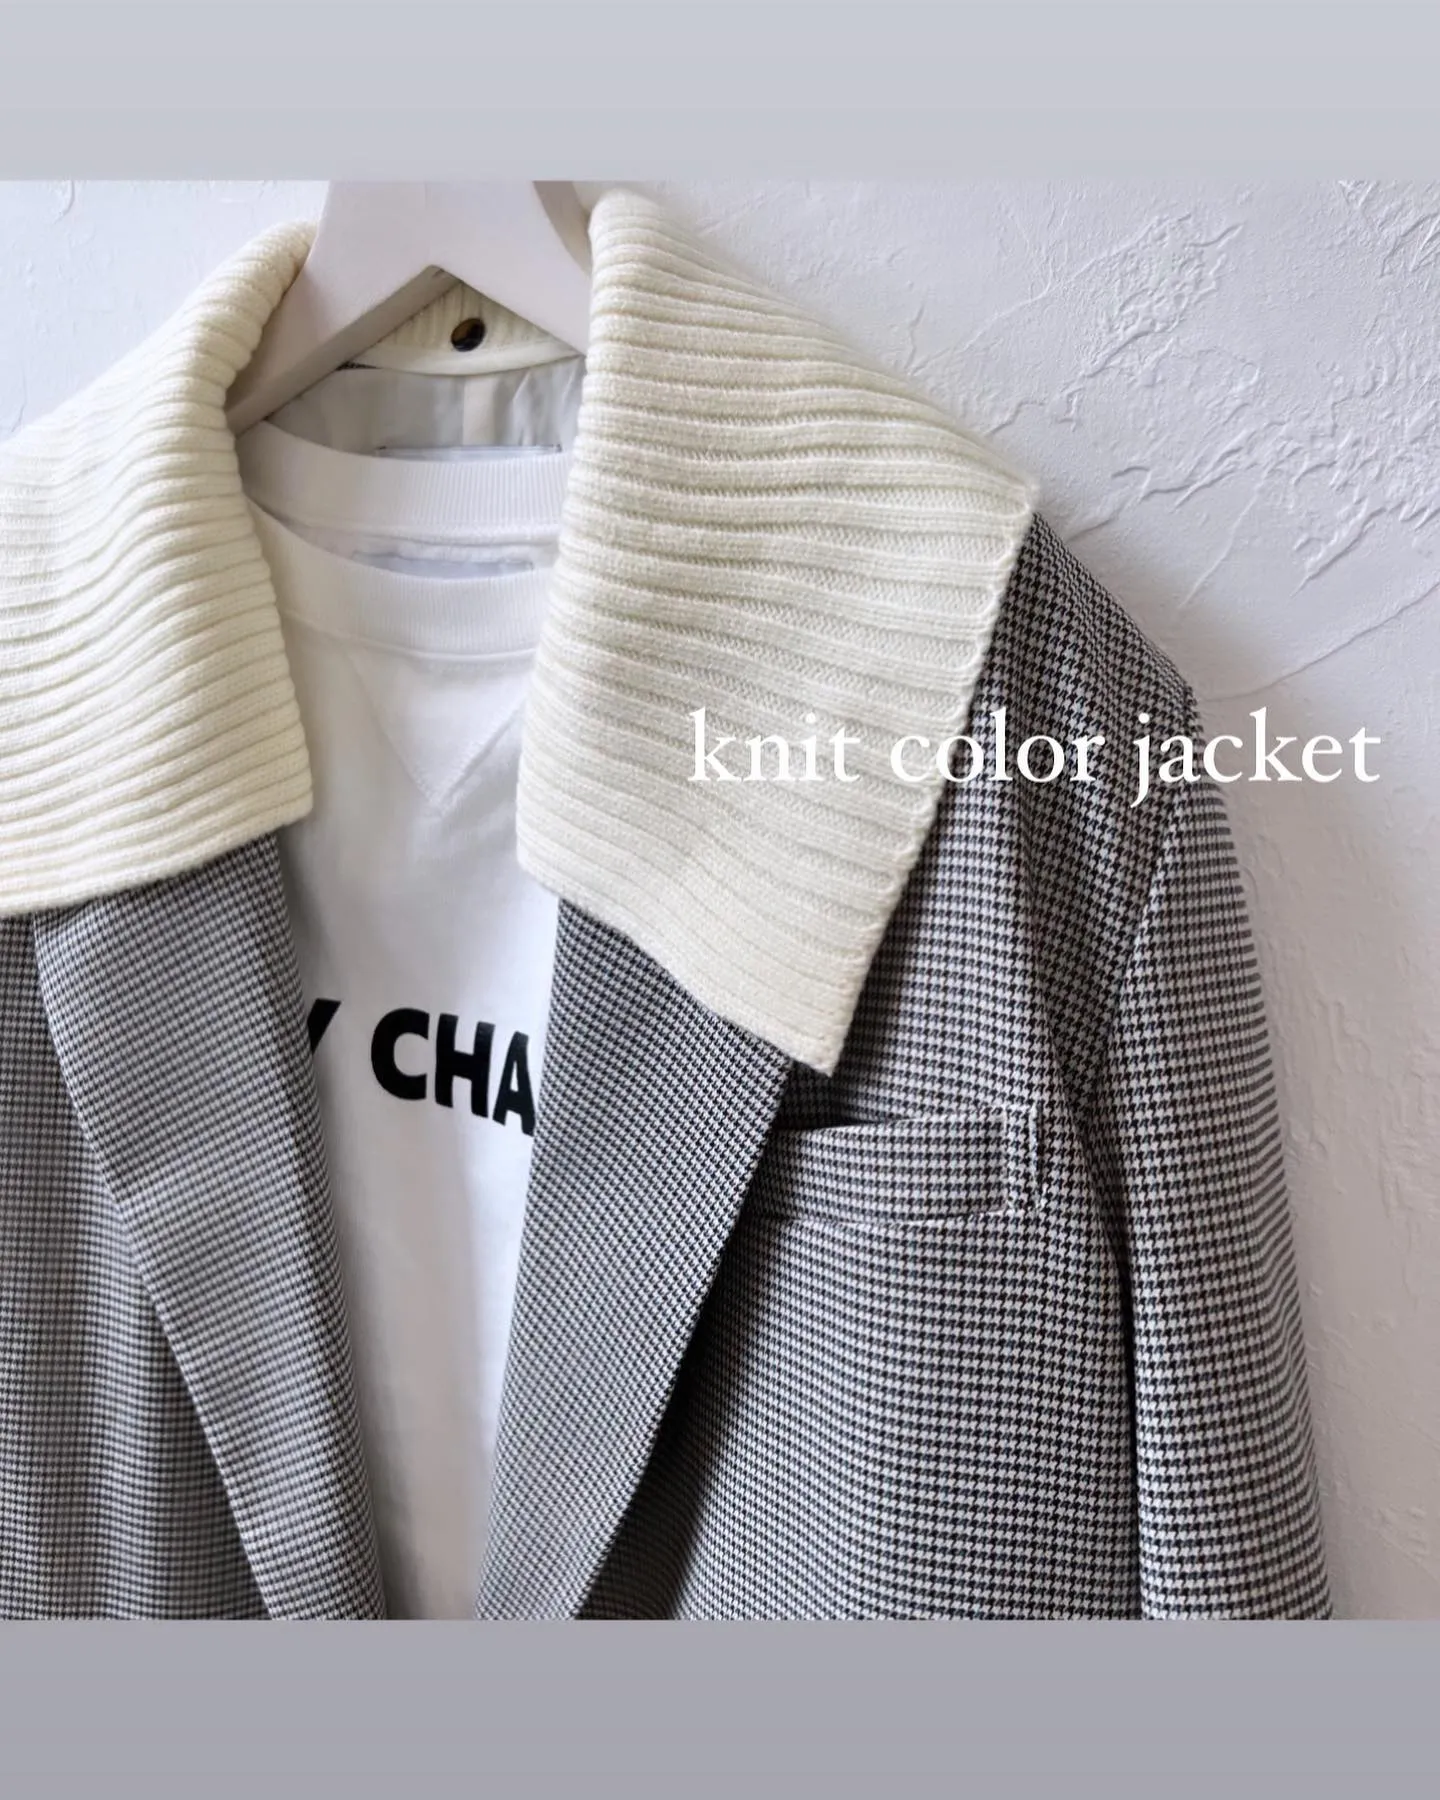 knit collar double jacket